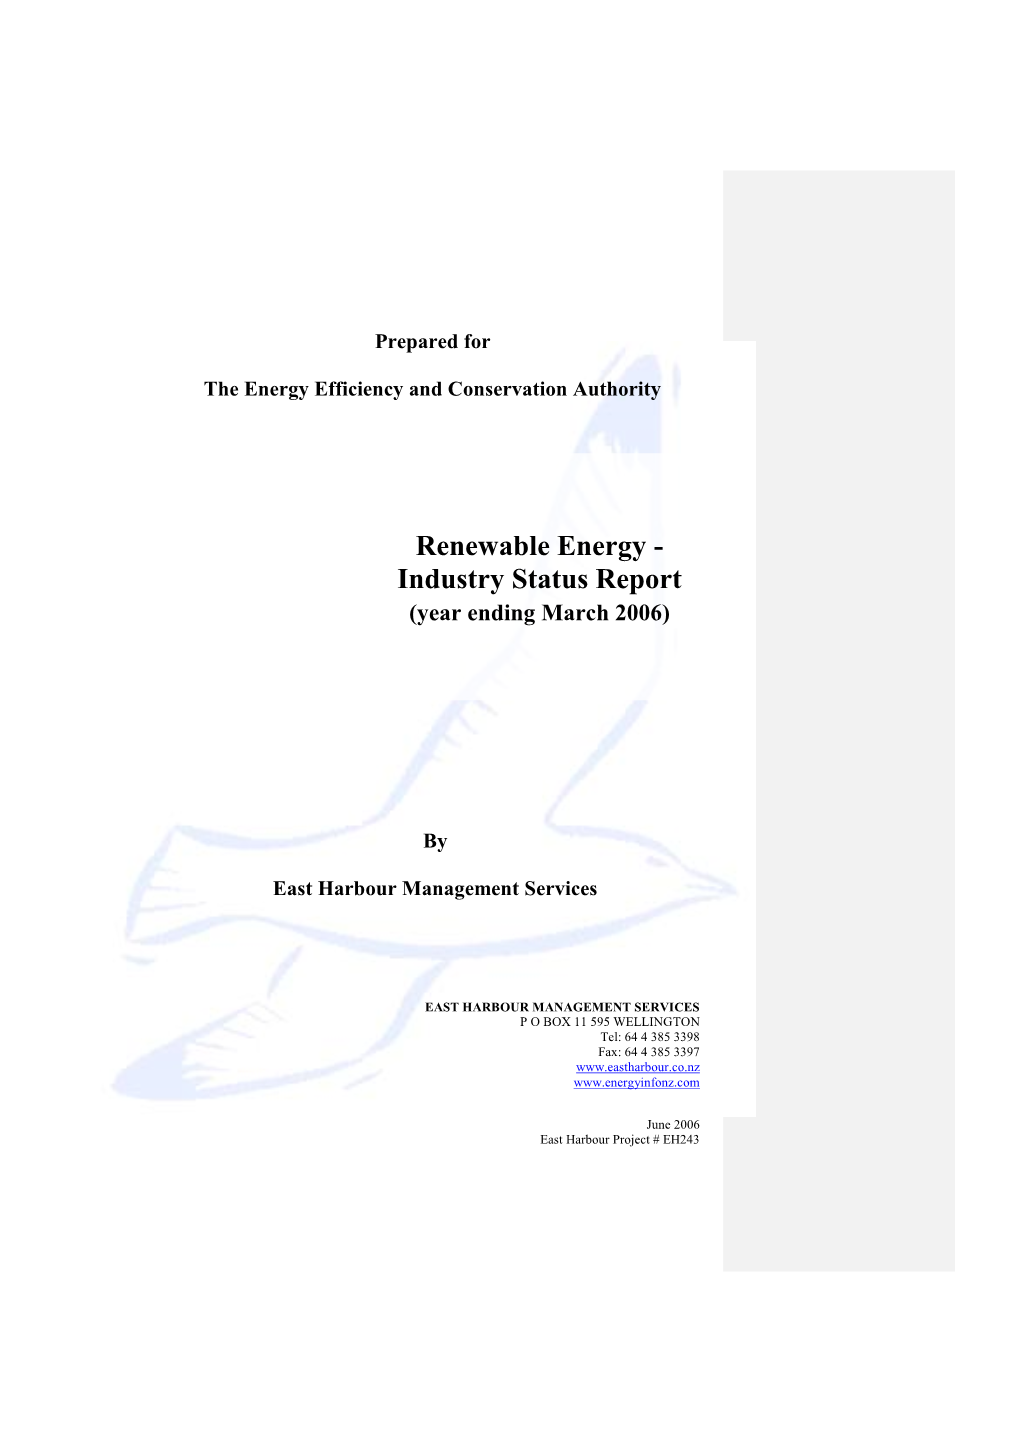 Renewable Energy - Industry Status Report (Year Ending March 2006)